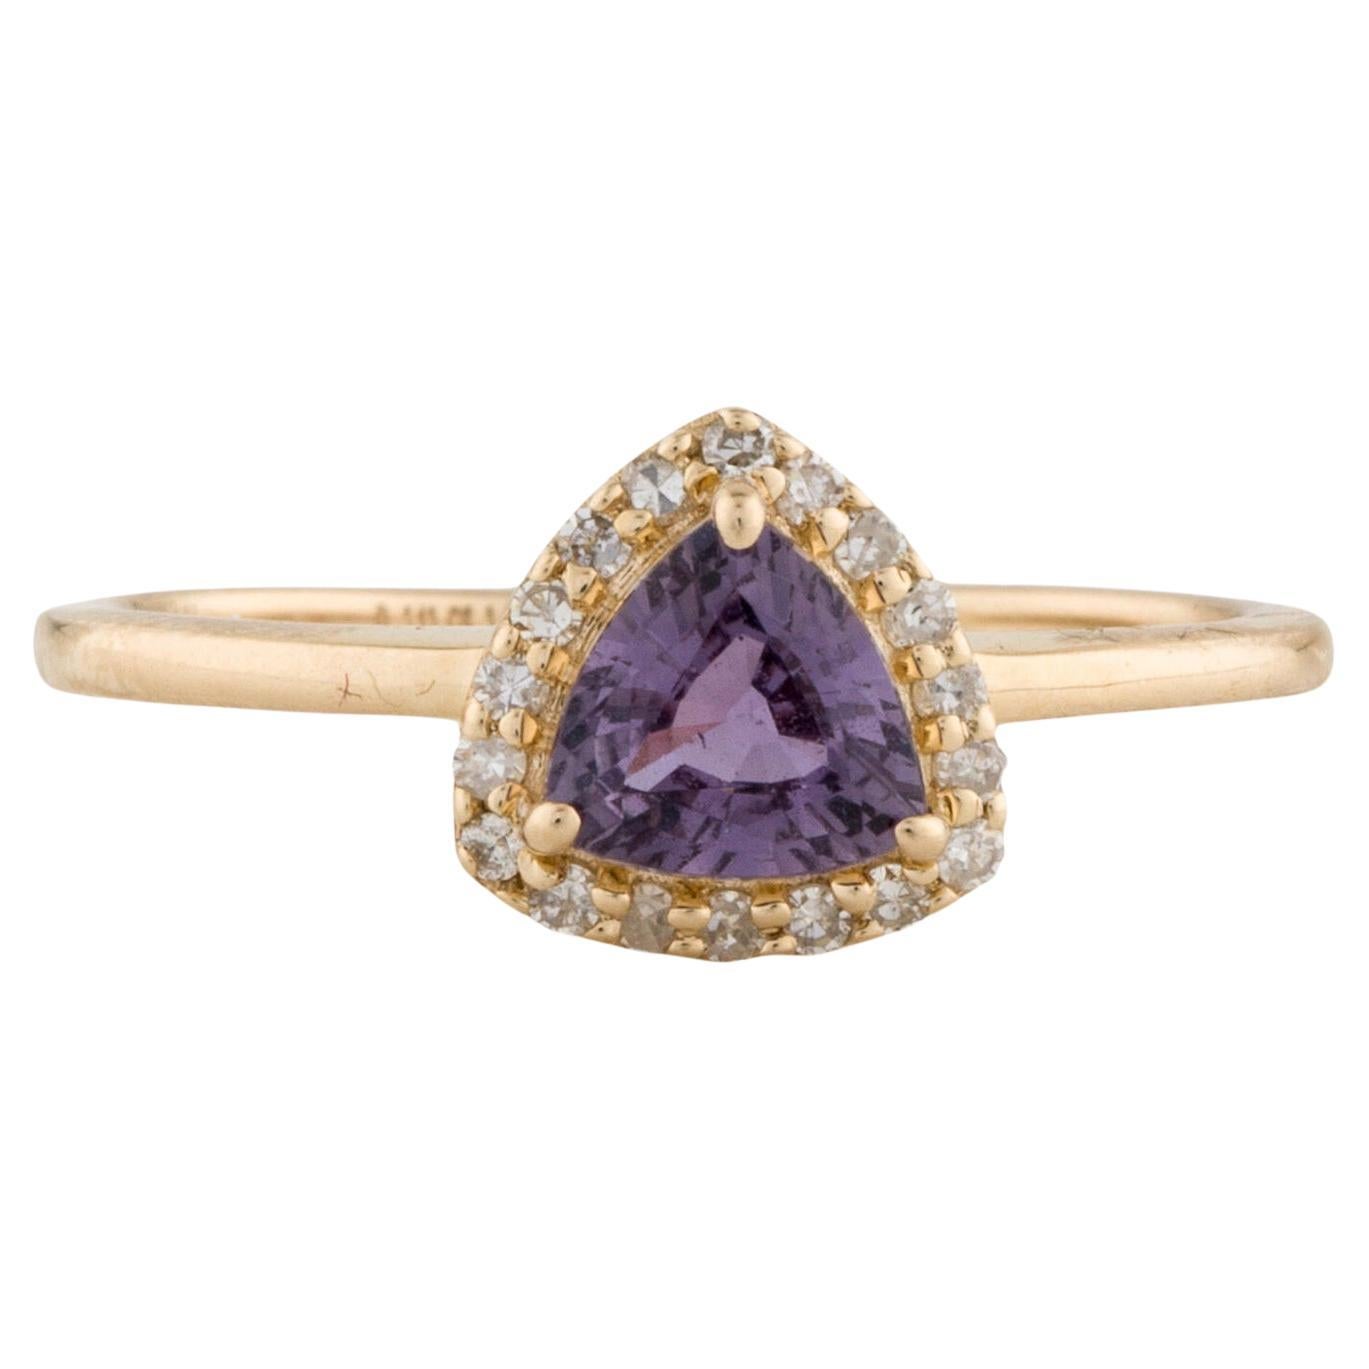 14K Sapphire & Diamond Cocktail Ring - Size 6.75 - Elegant Statement Jewelry For Sale